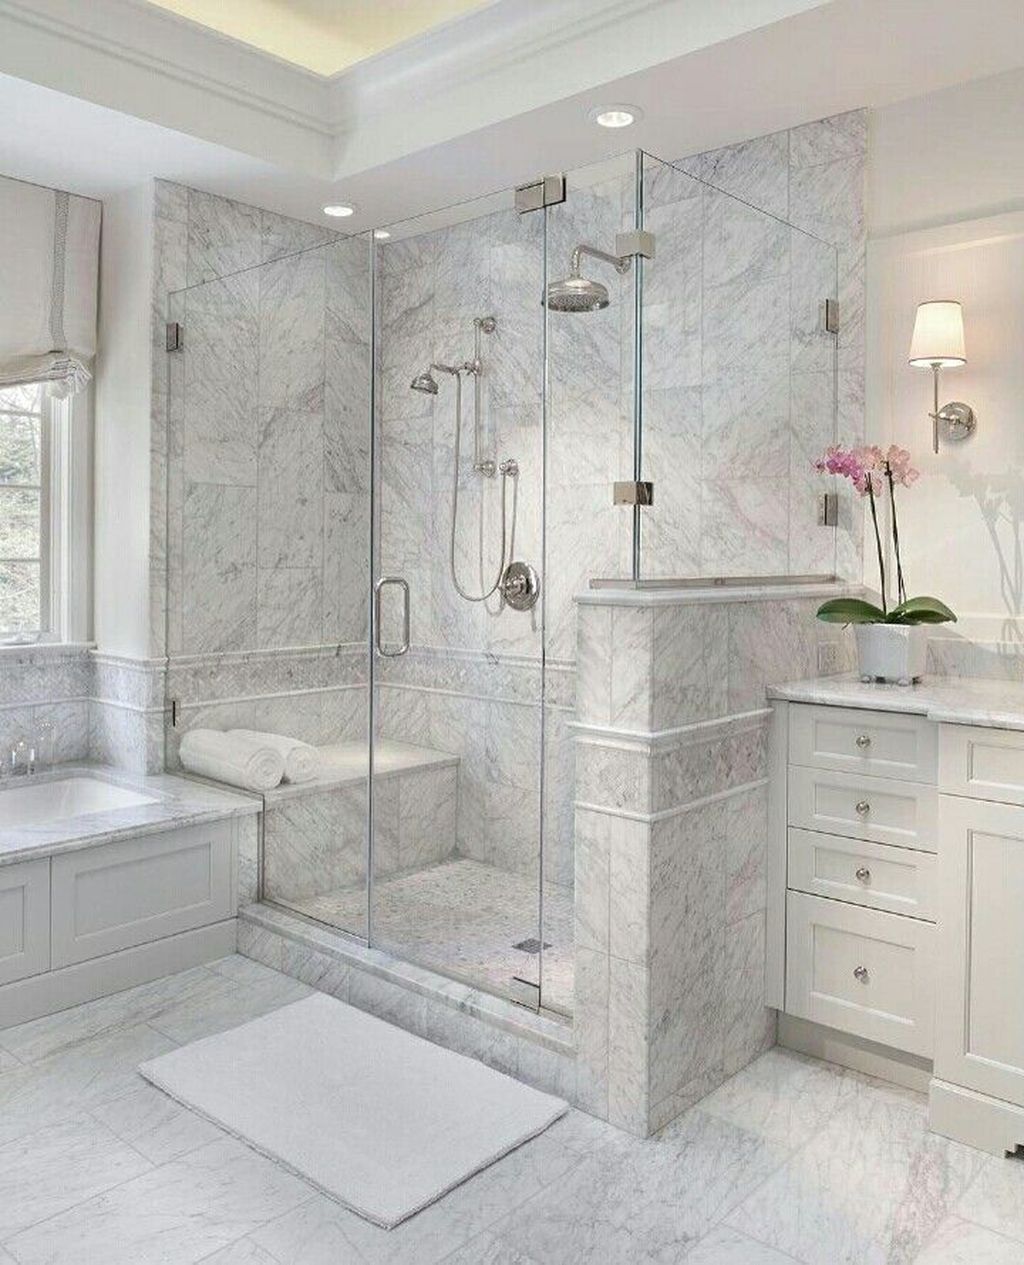 34 Fabulous Modern Master Bathroom Design Ideas - Fabulous MoDern Master Bathroom Design IDeas 05